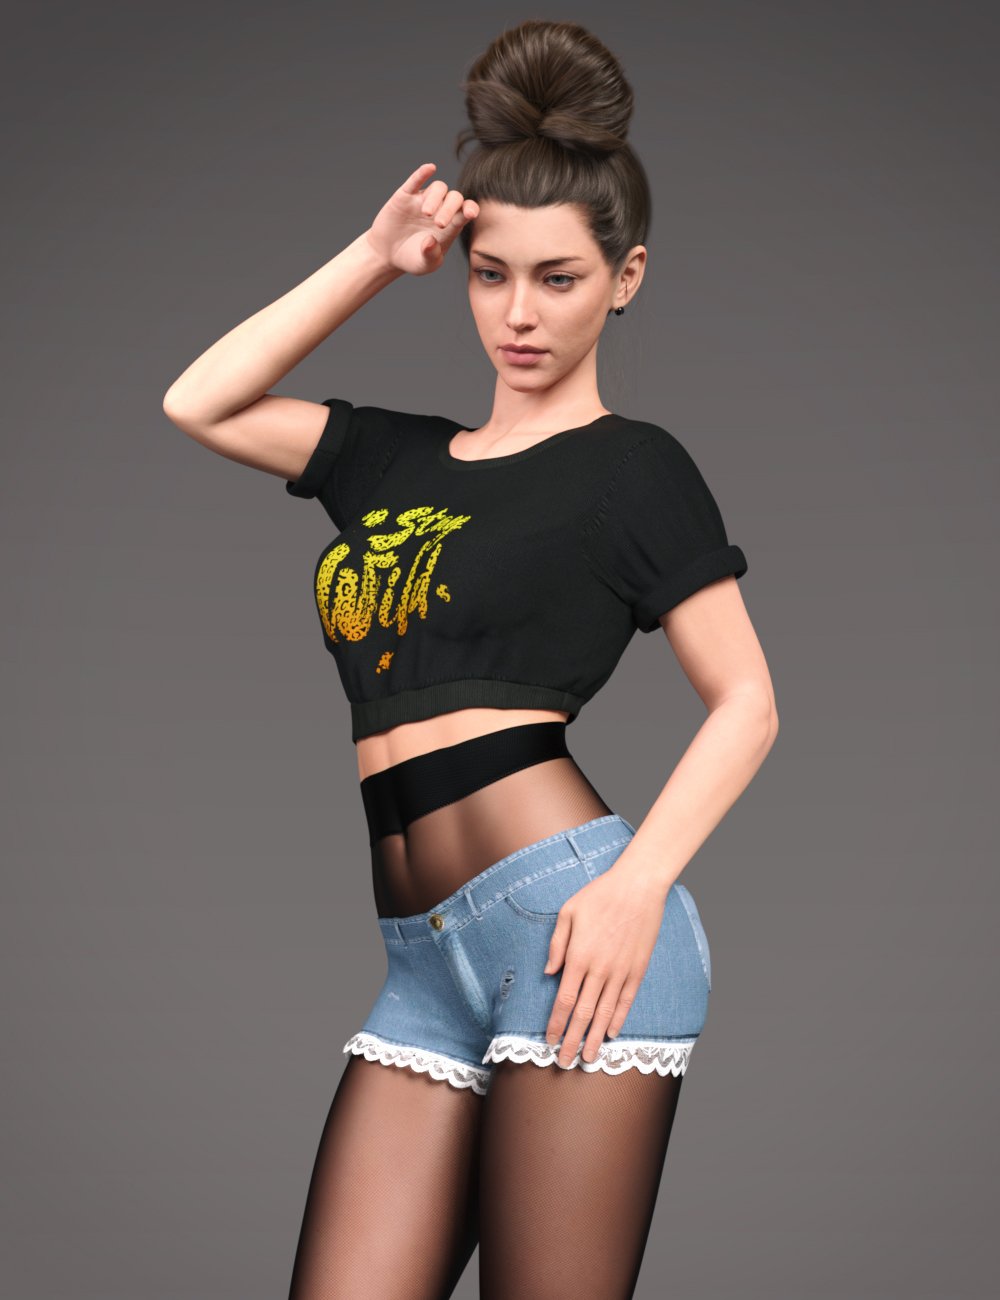 GN Tina HD for Genesis 8.1 Female by: Goanna, 3D Models by Daz 3D